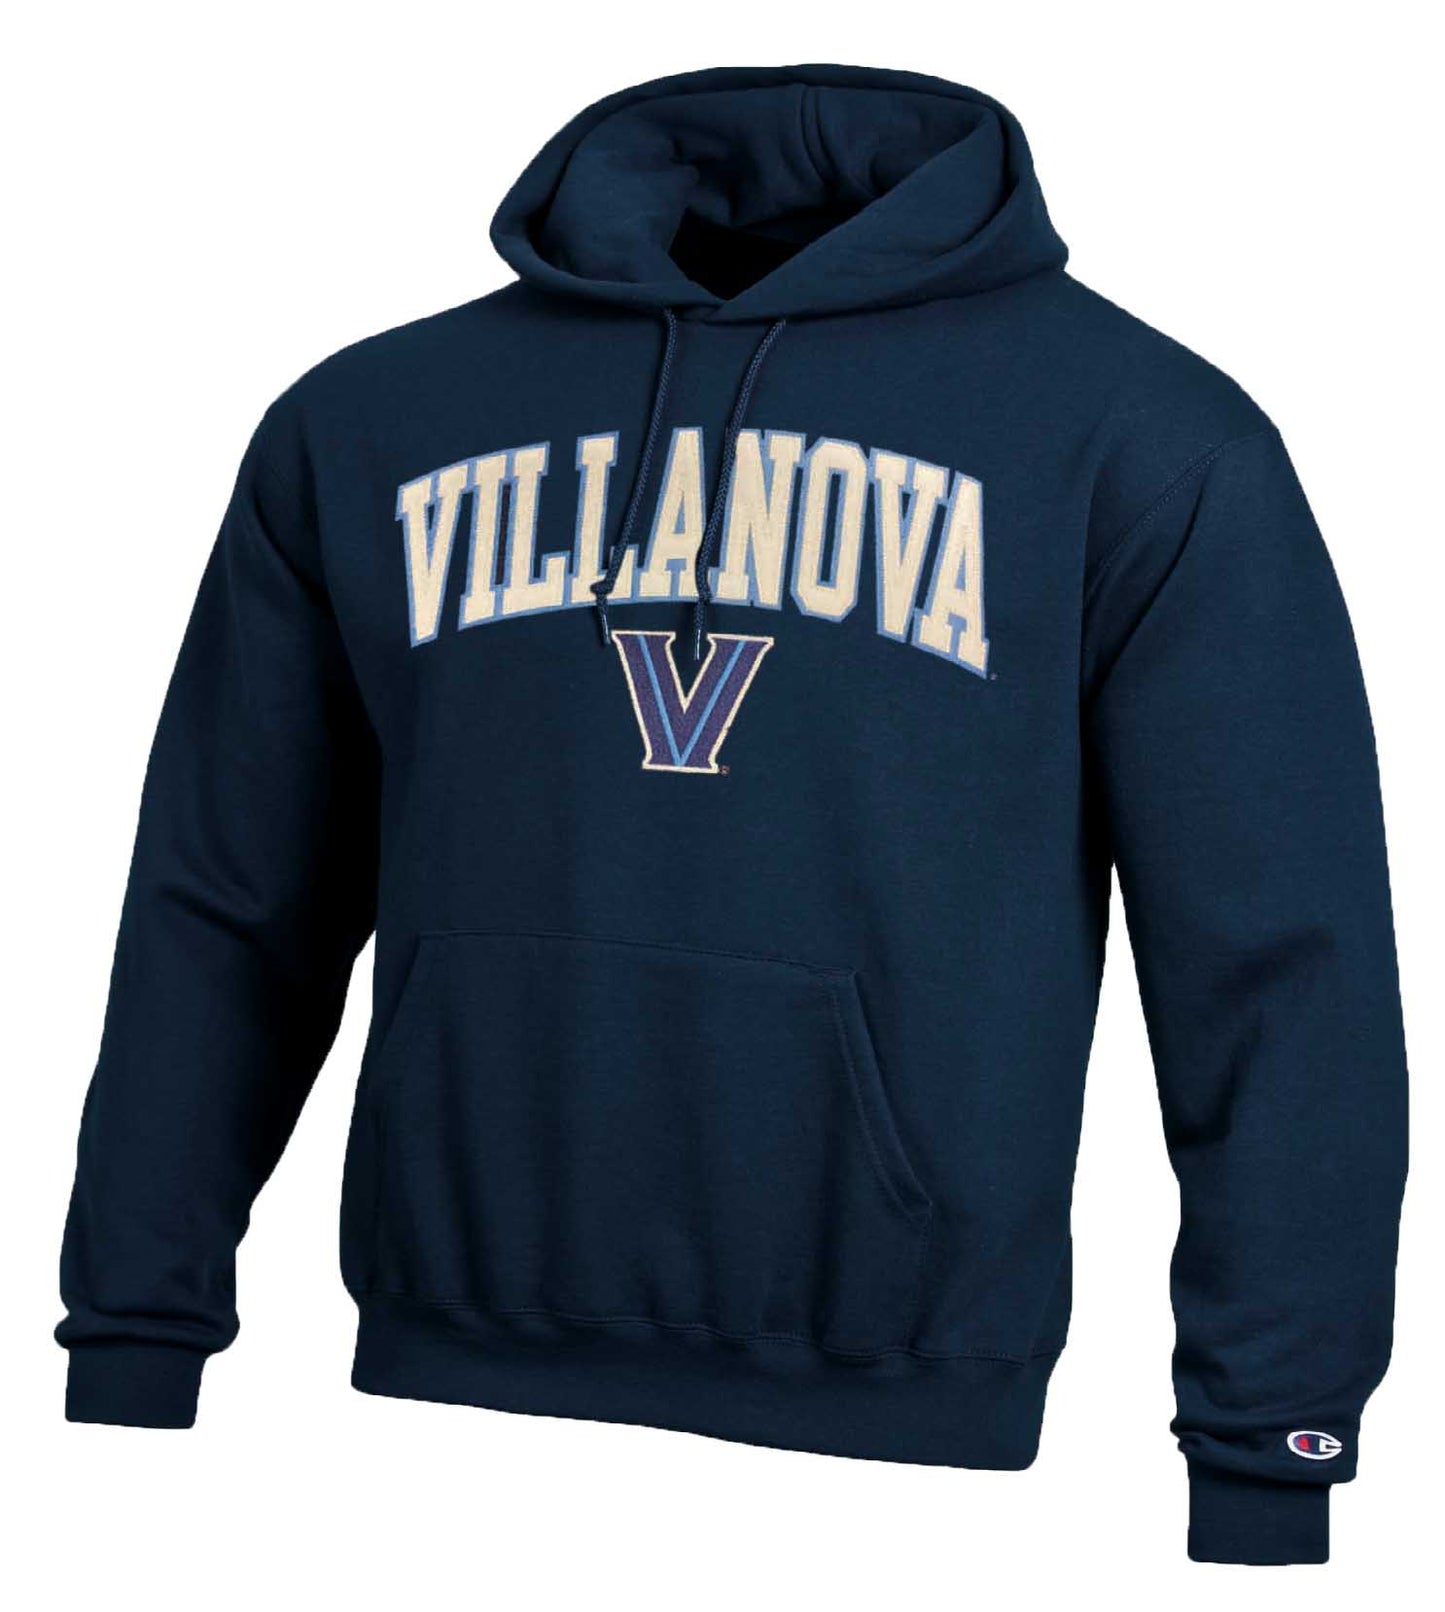 Villanova Wildcats Champion Adult Tackle Twill Hooded Sweatshirt - Navy